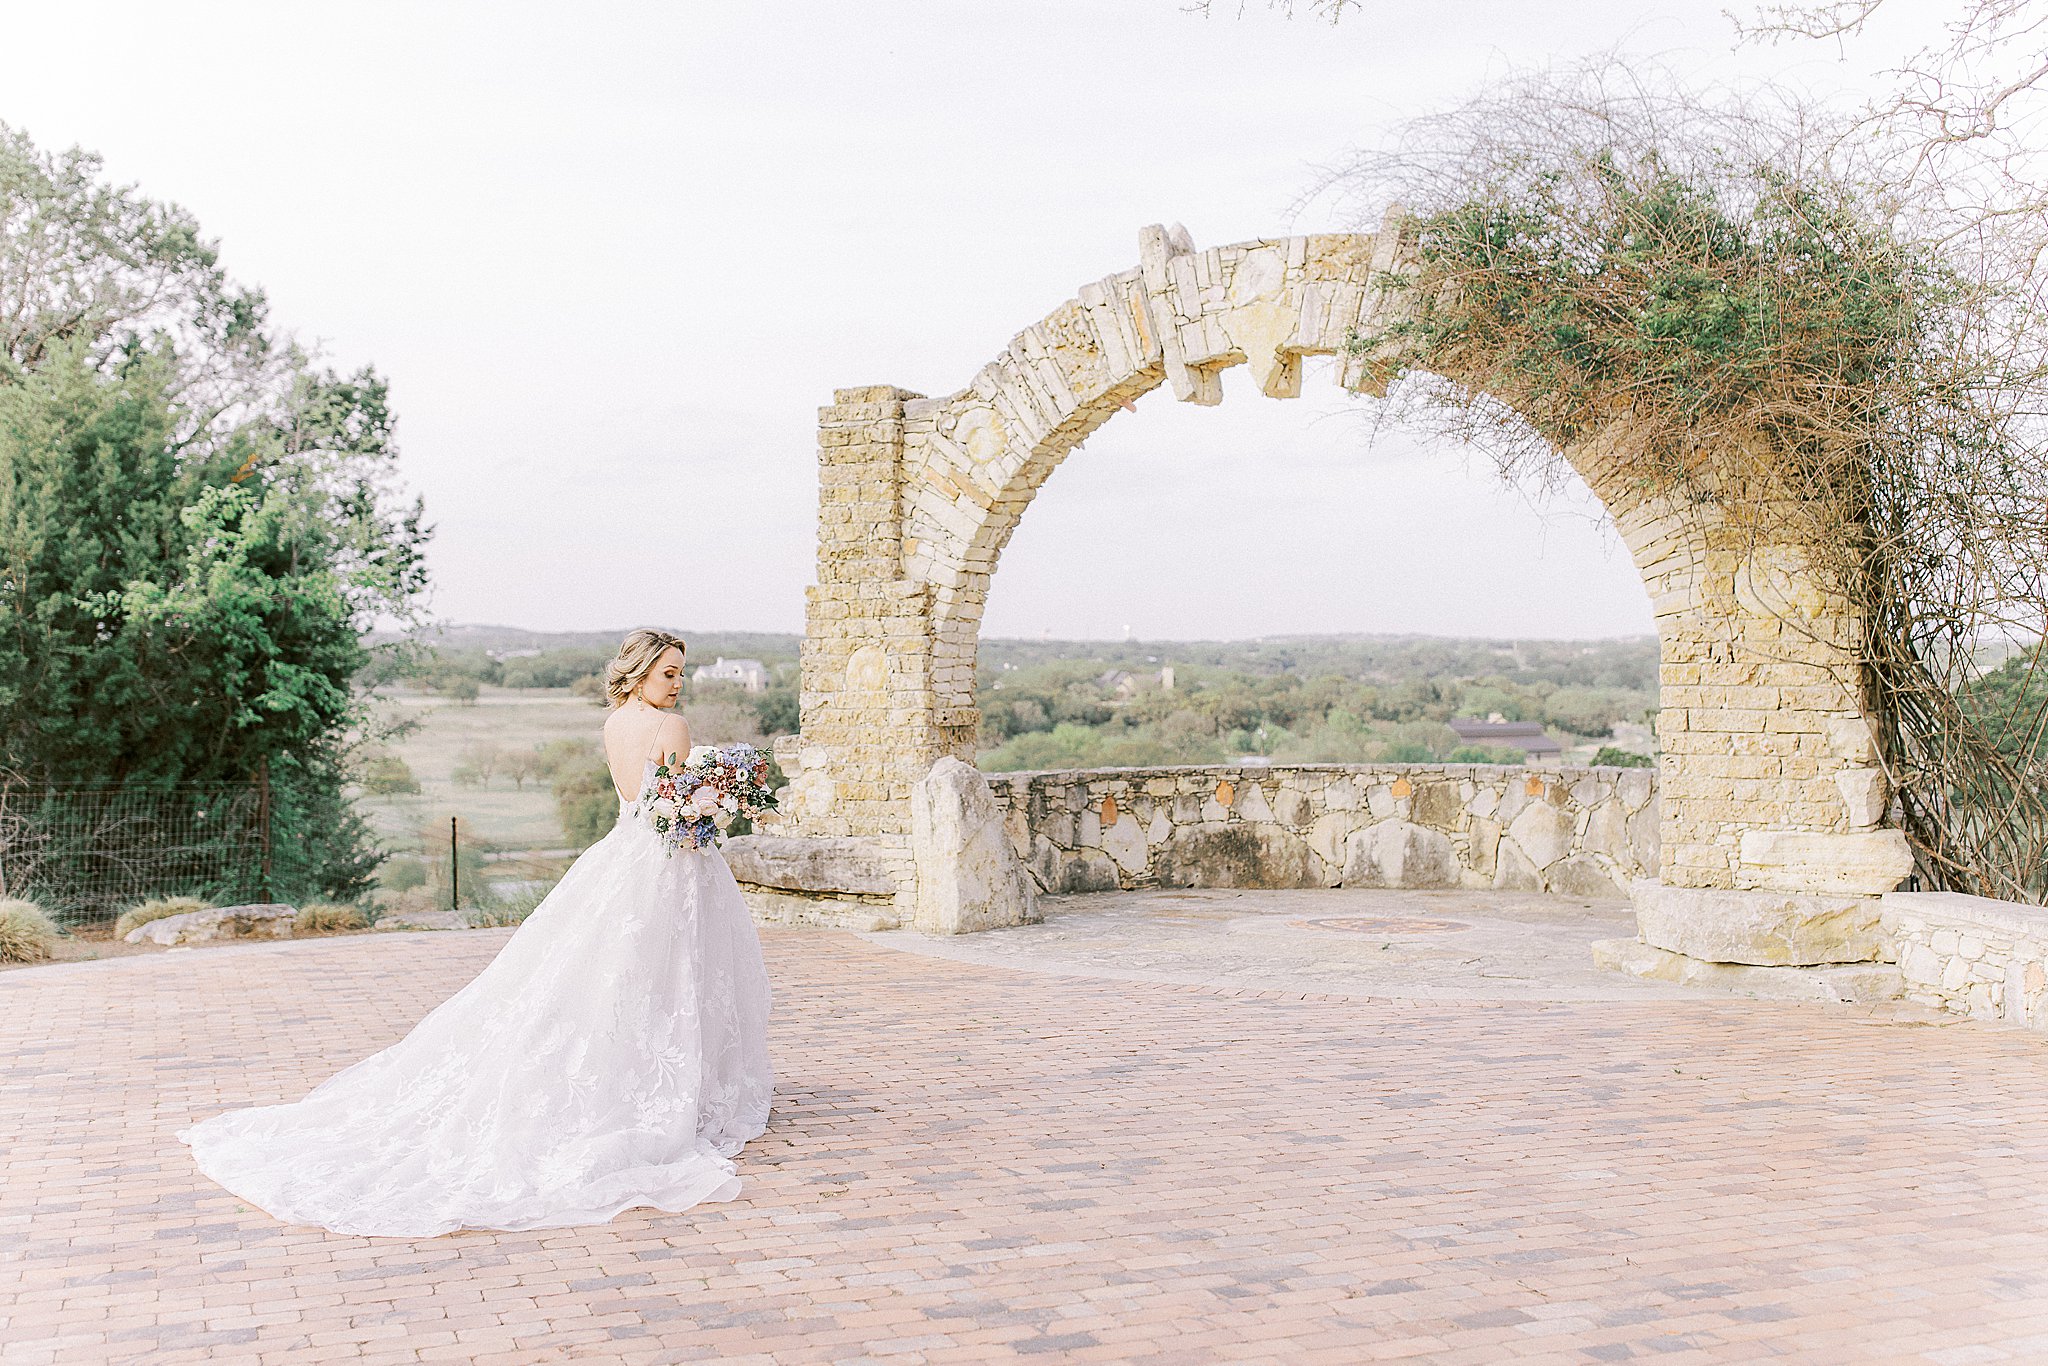 Austin bride, Camp Lucy brick terrace, stone archway wedding venue